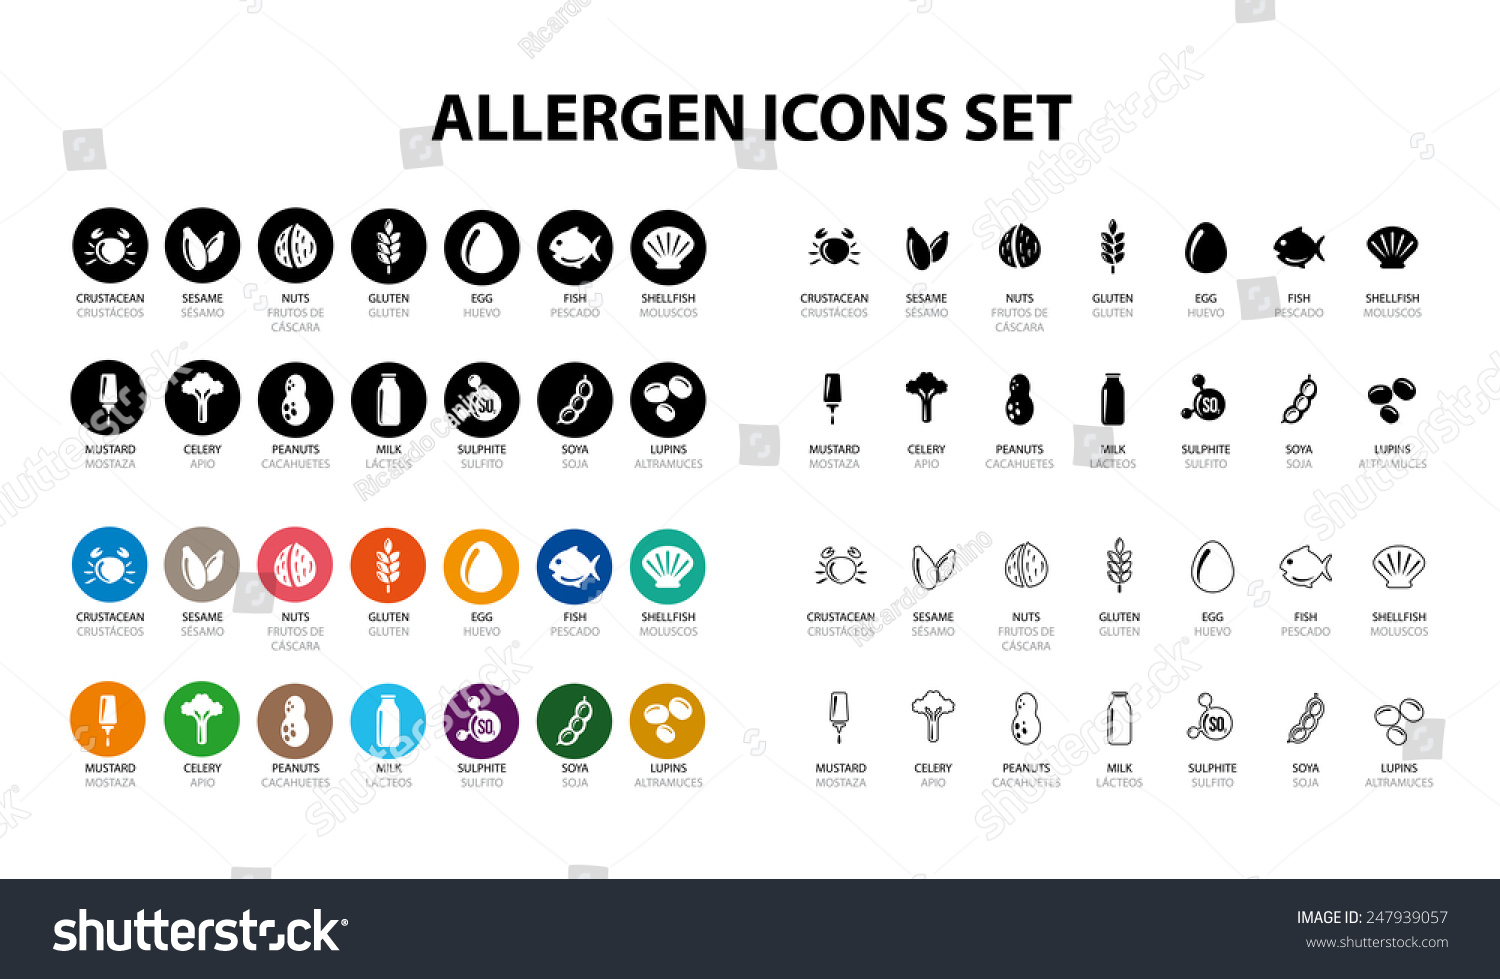 SVG of Allergen Icons svg